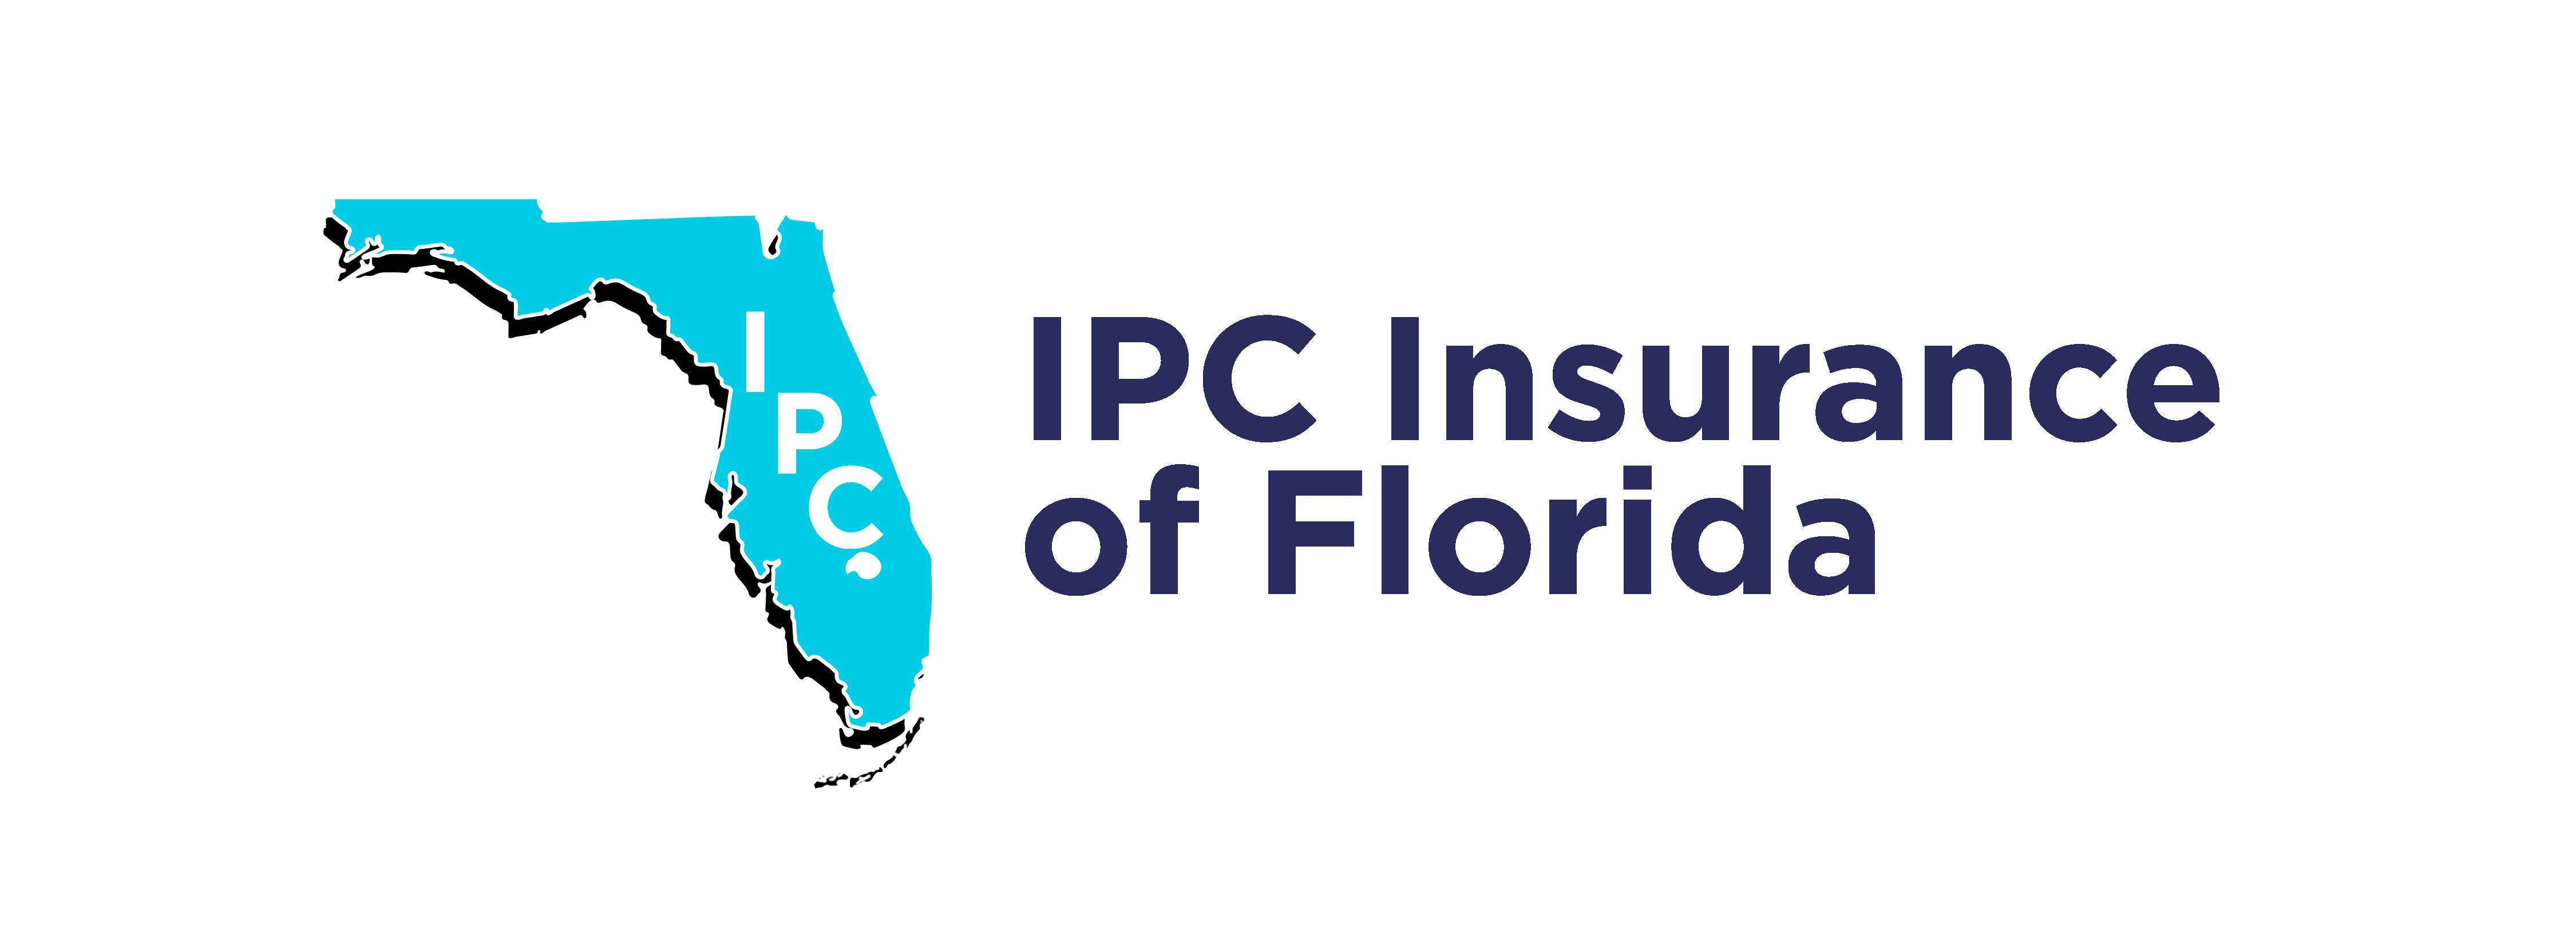 IPC Insurance of Florida